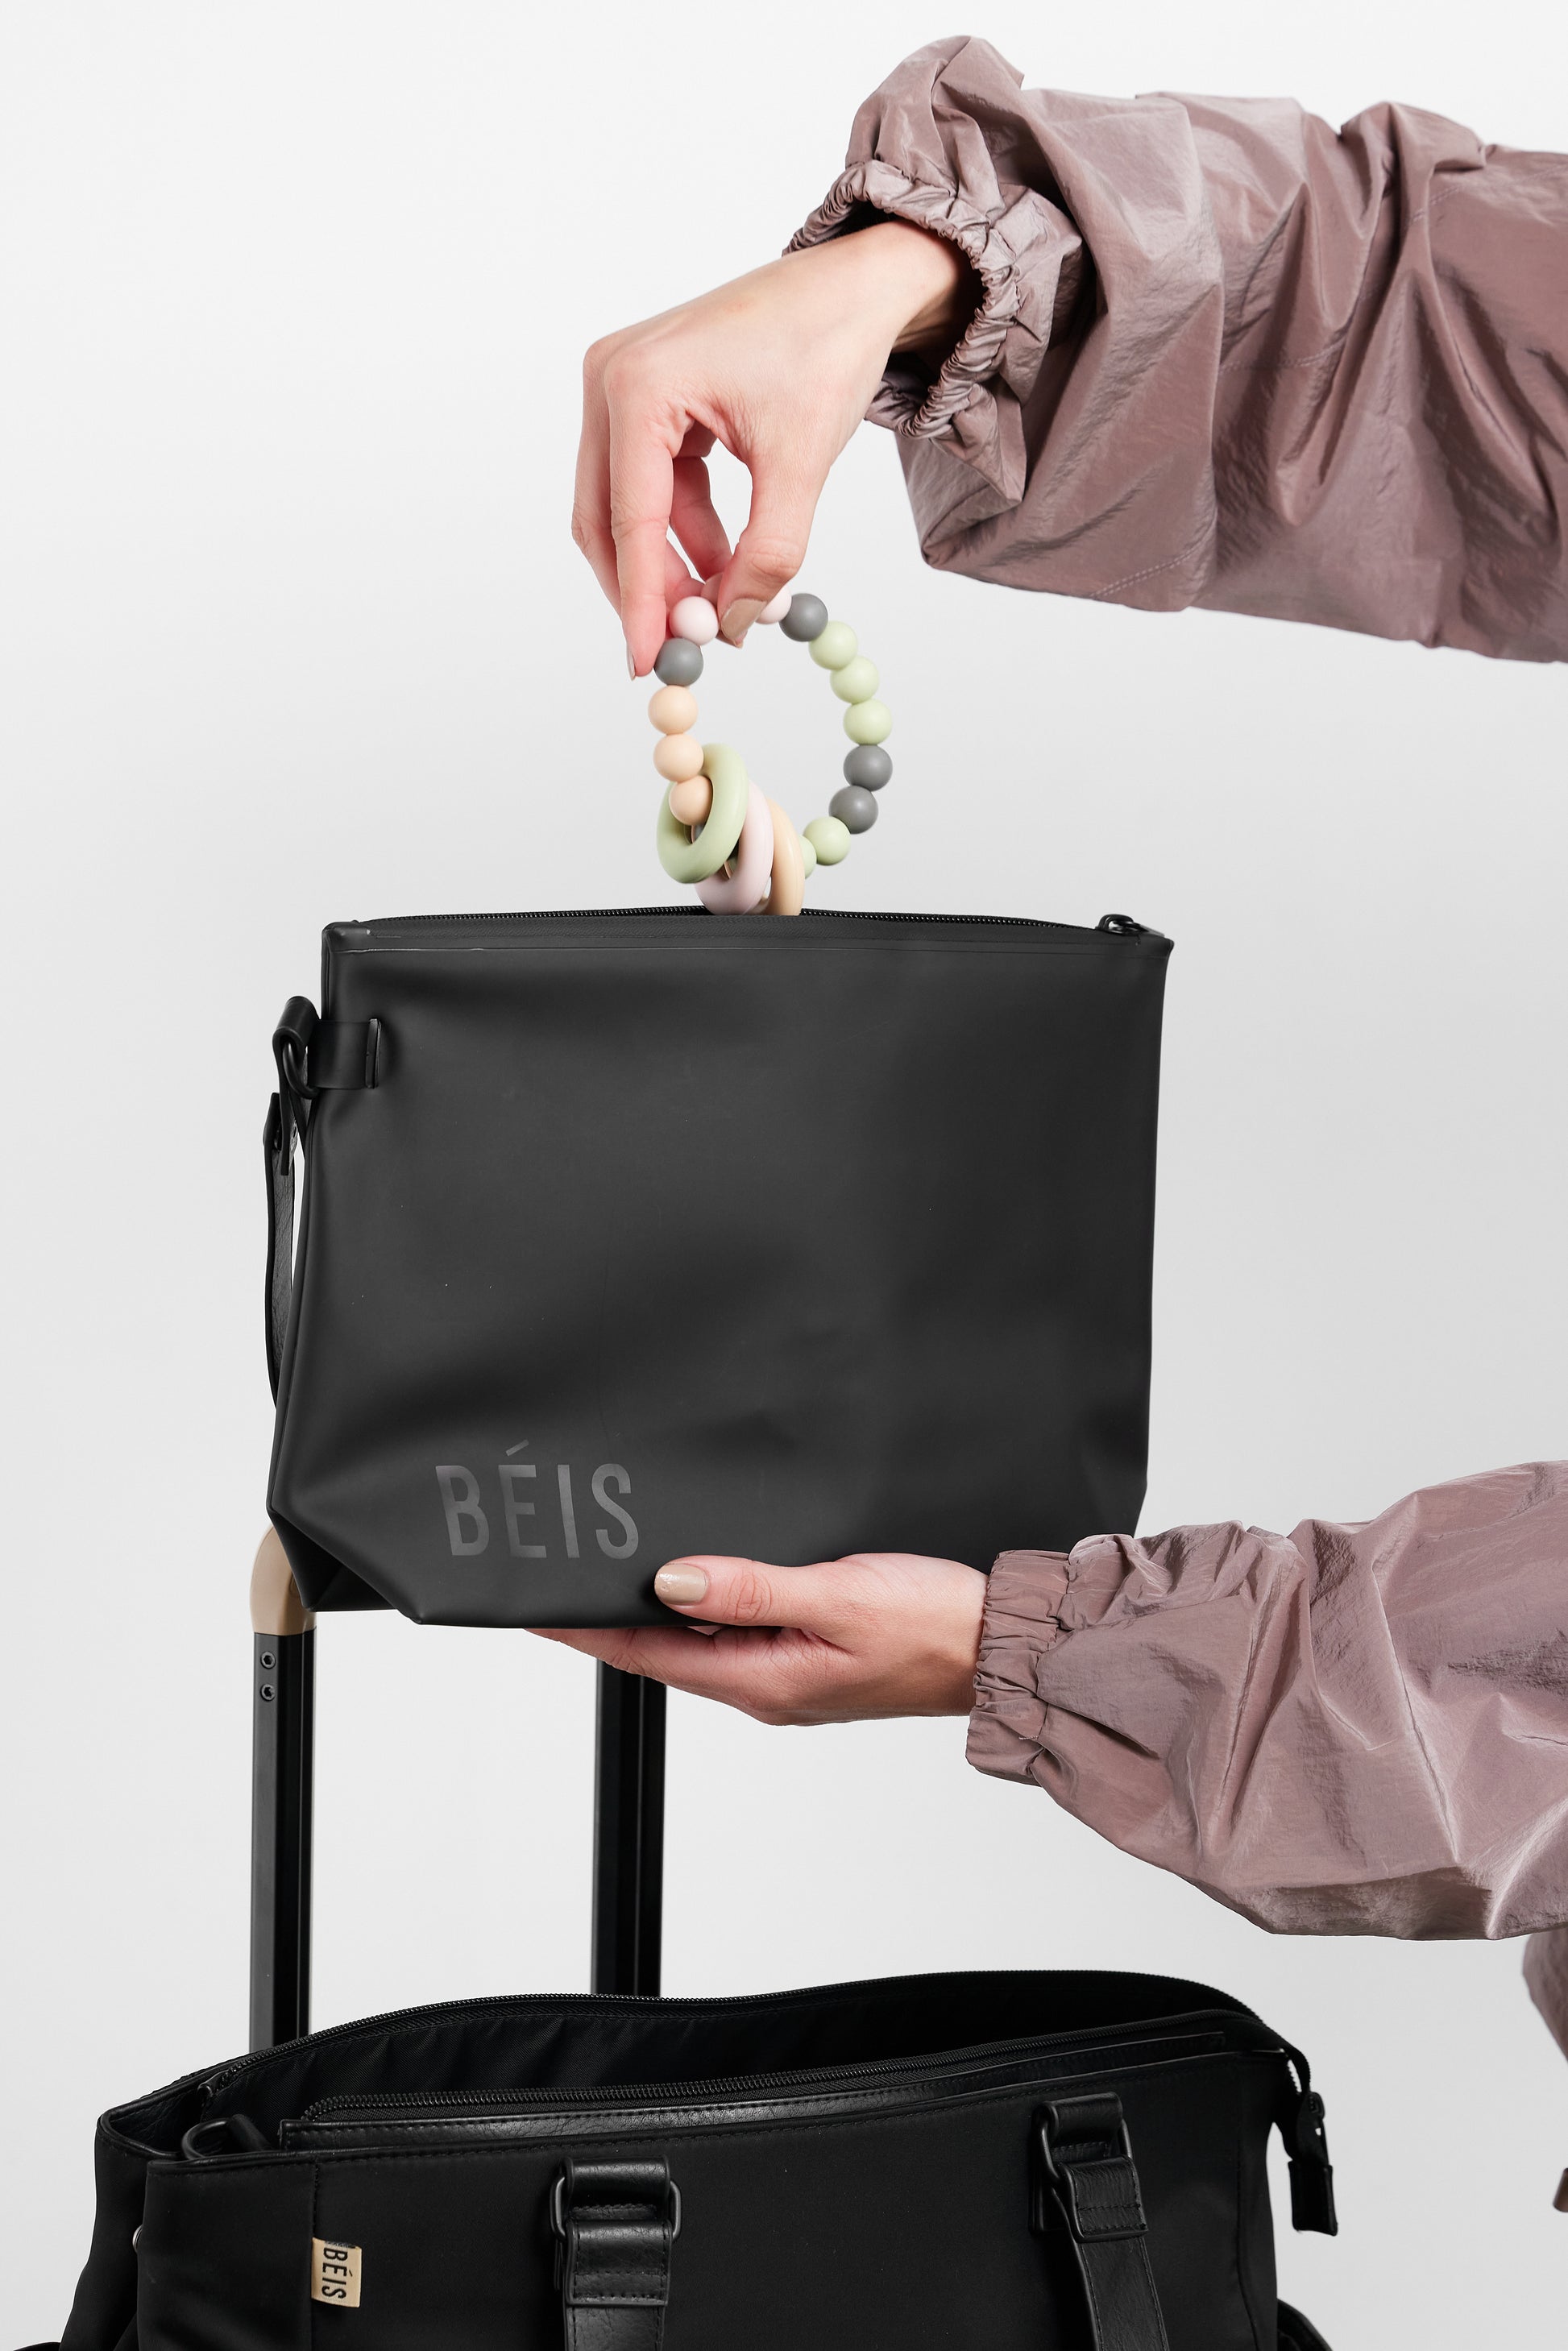 BÉIS 'The Tote Insert' in Black - Diaper Bag Insert & Organizer